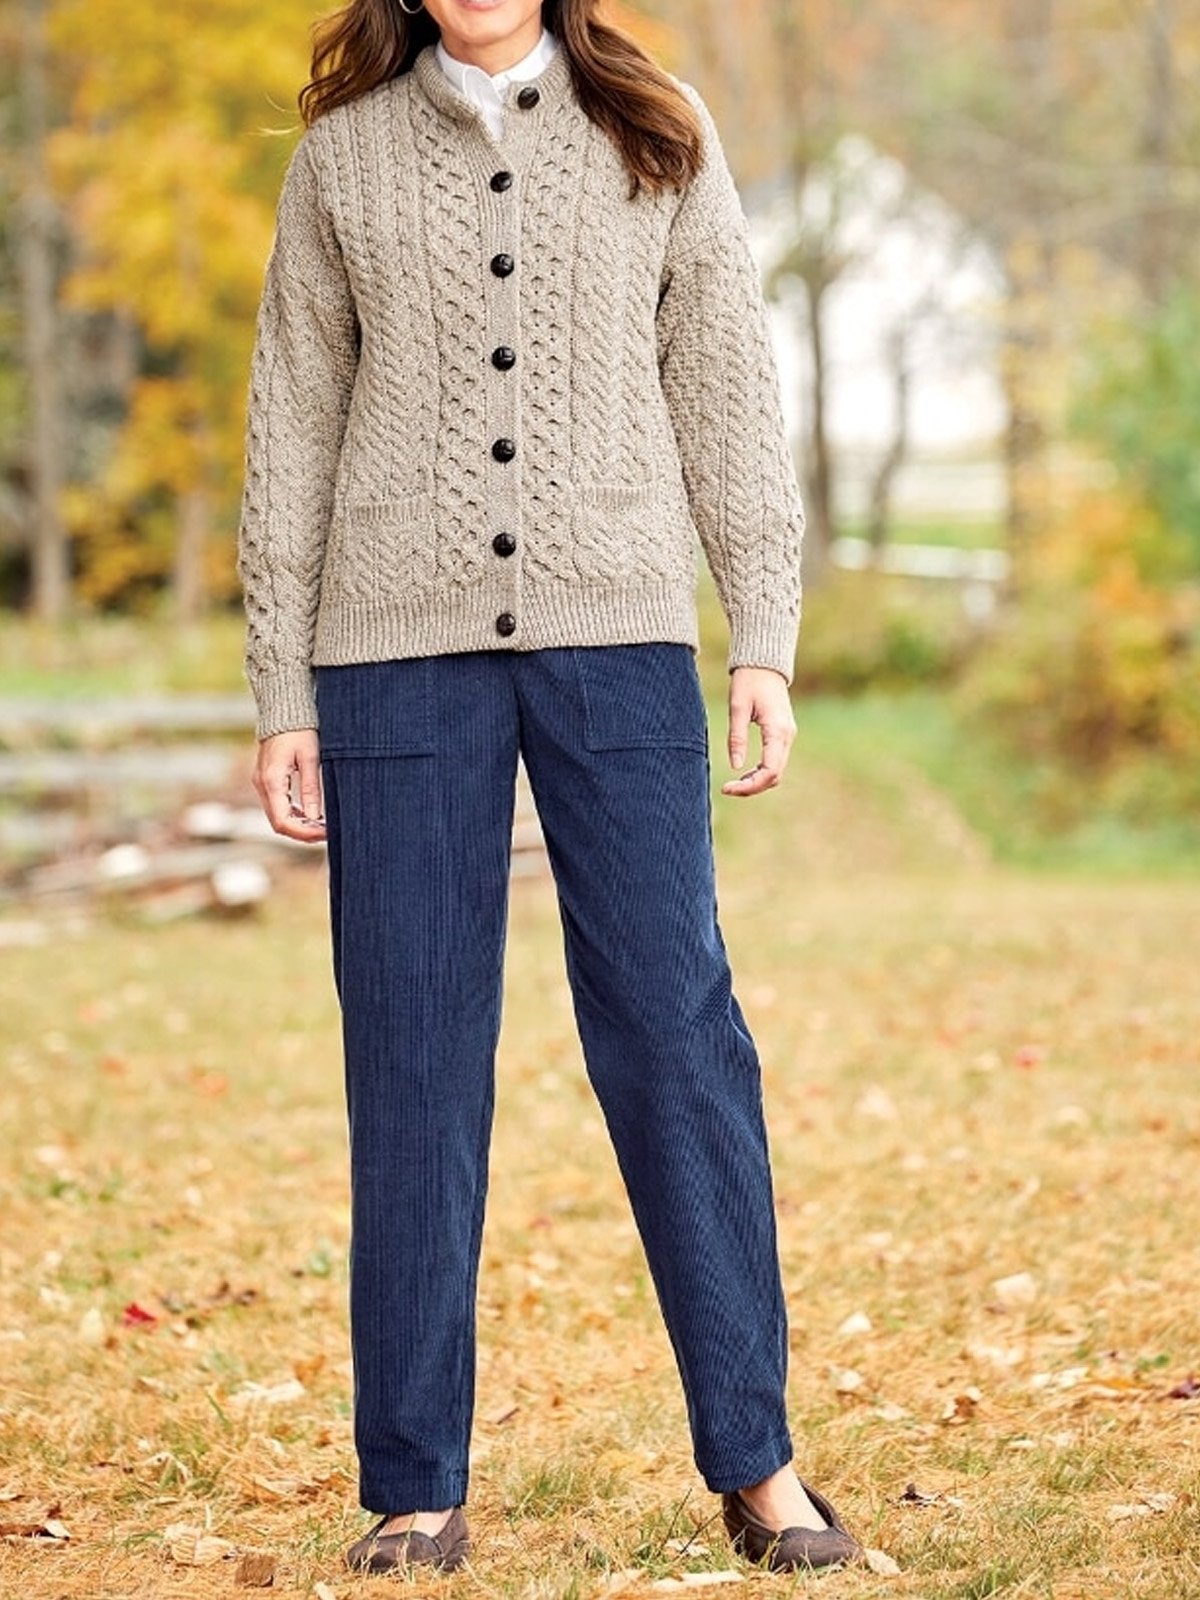 Women Autumn Winter Casual Plain Pockets Elastic Waist Corduroy Pants